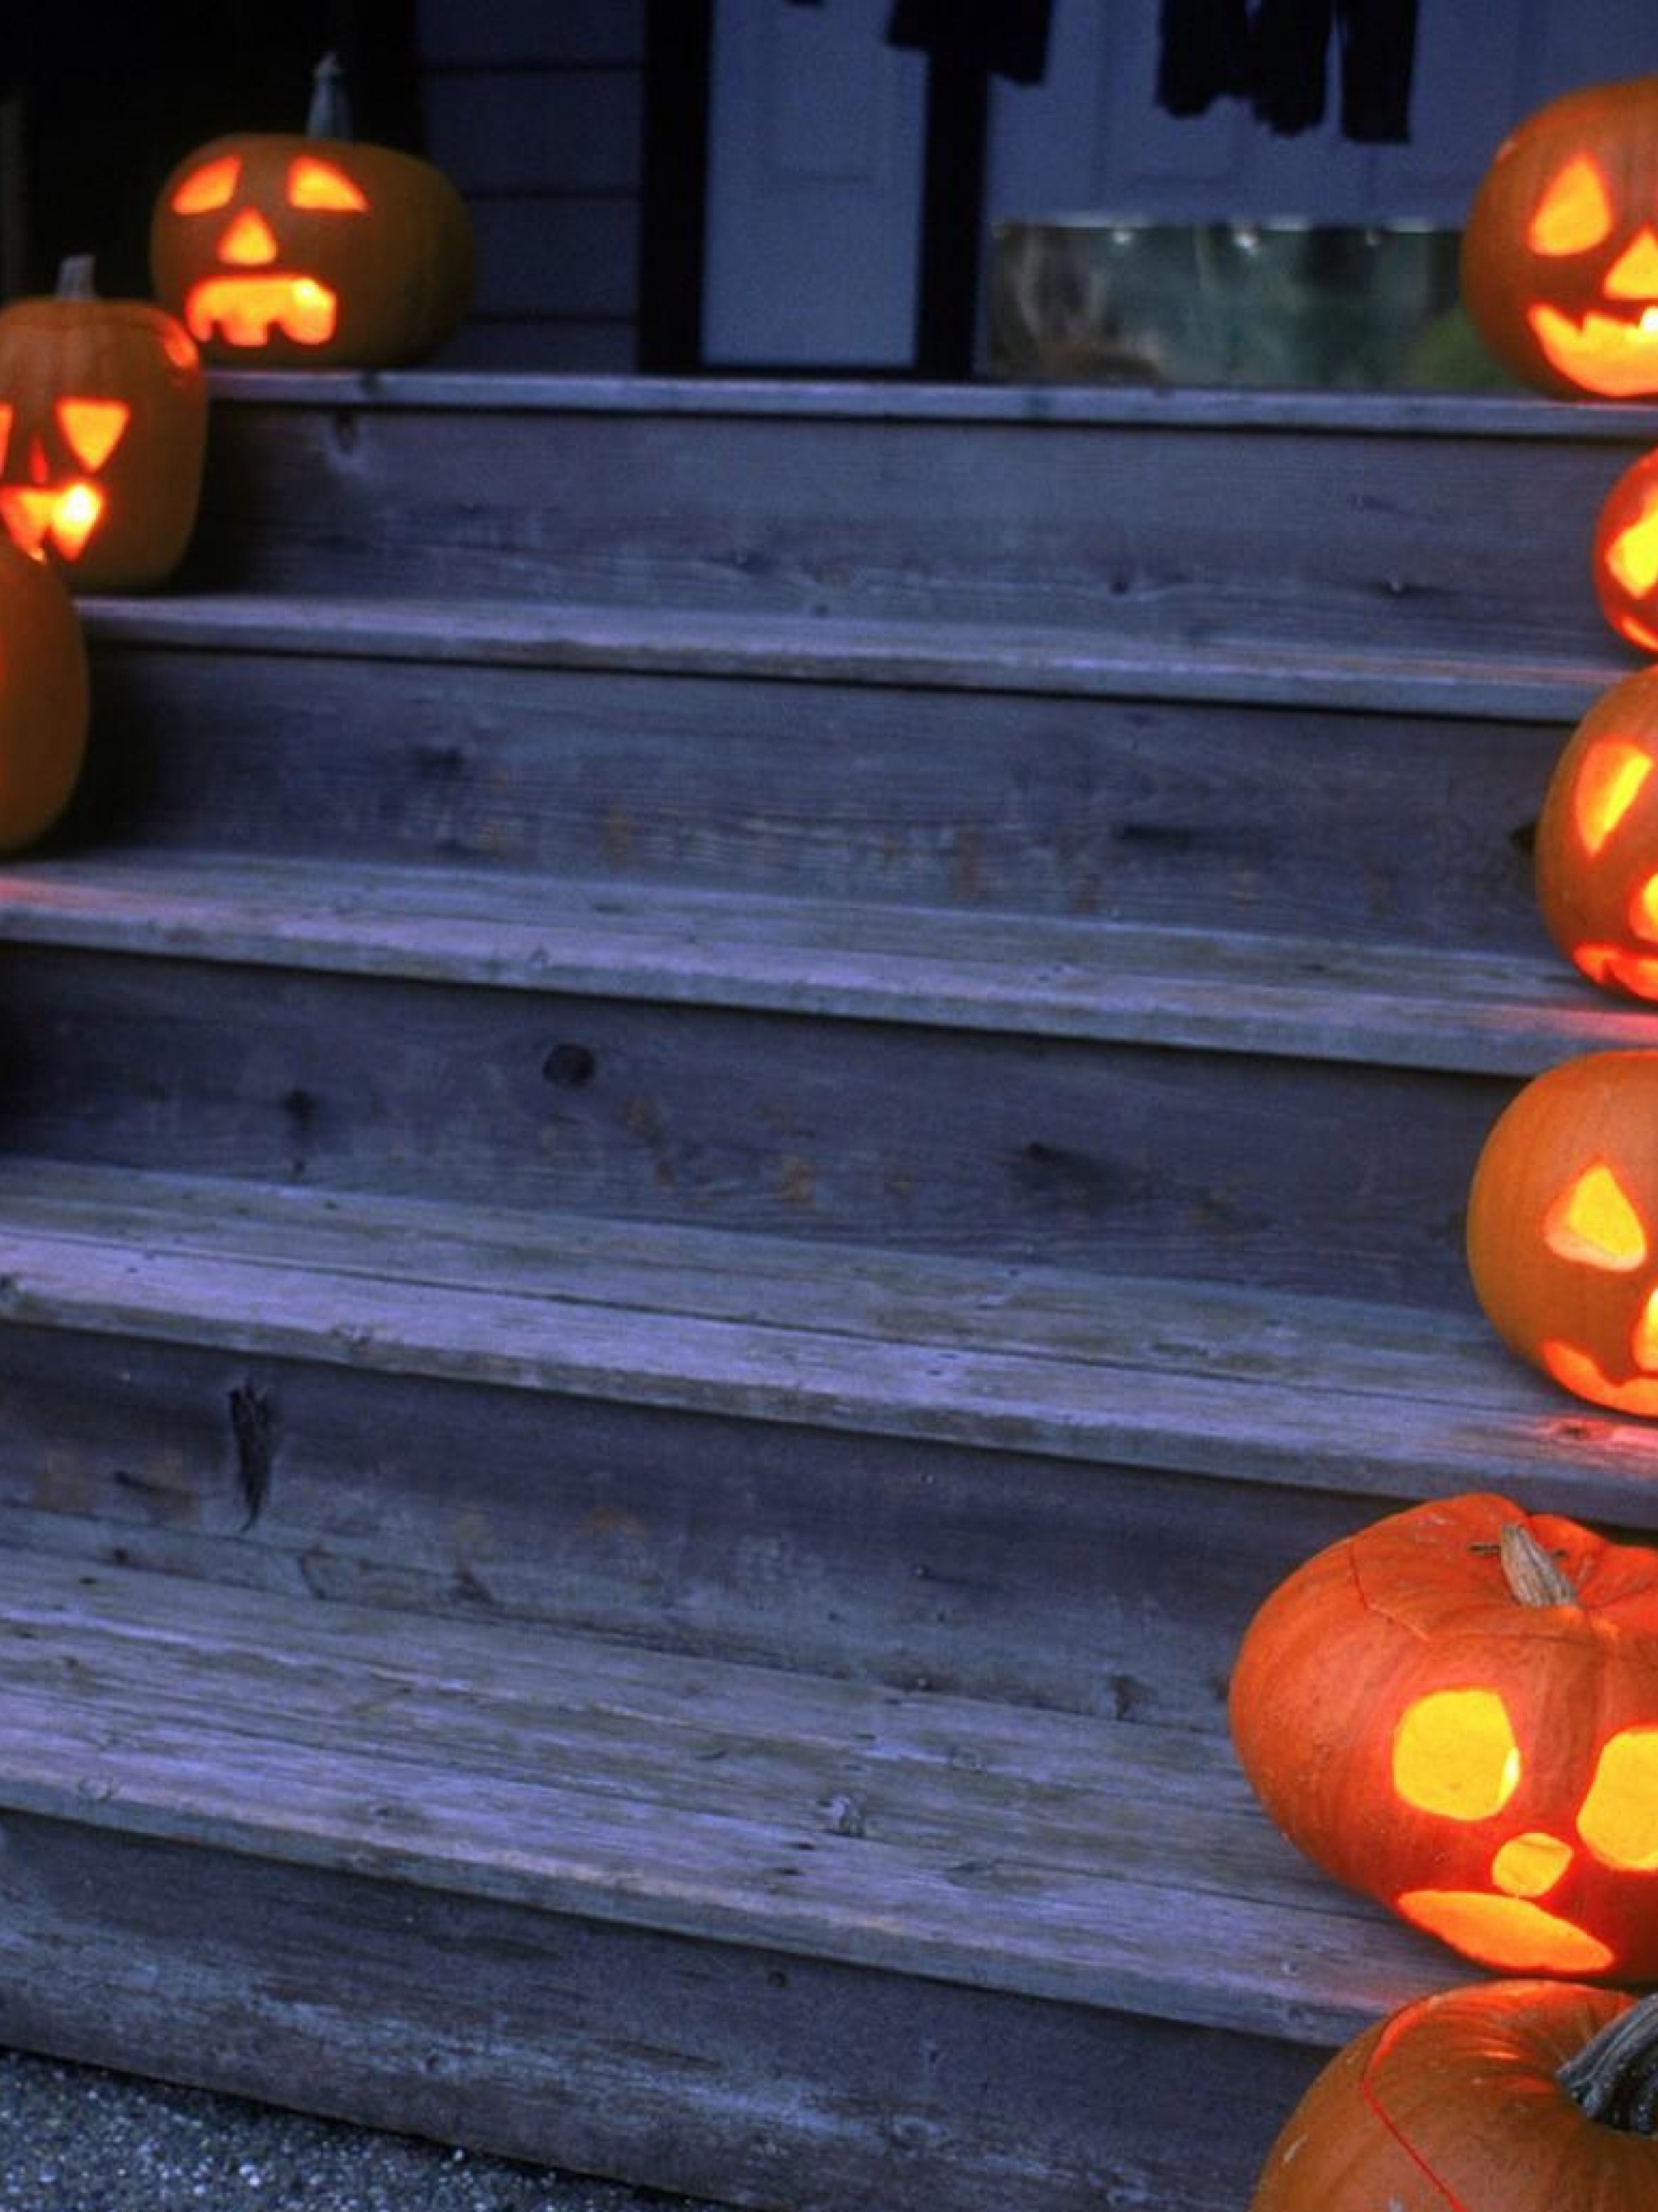 Halloween Pumpkins On Wooden Stairs